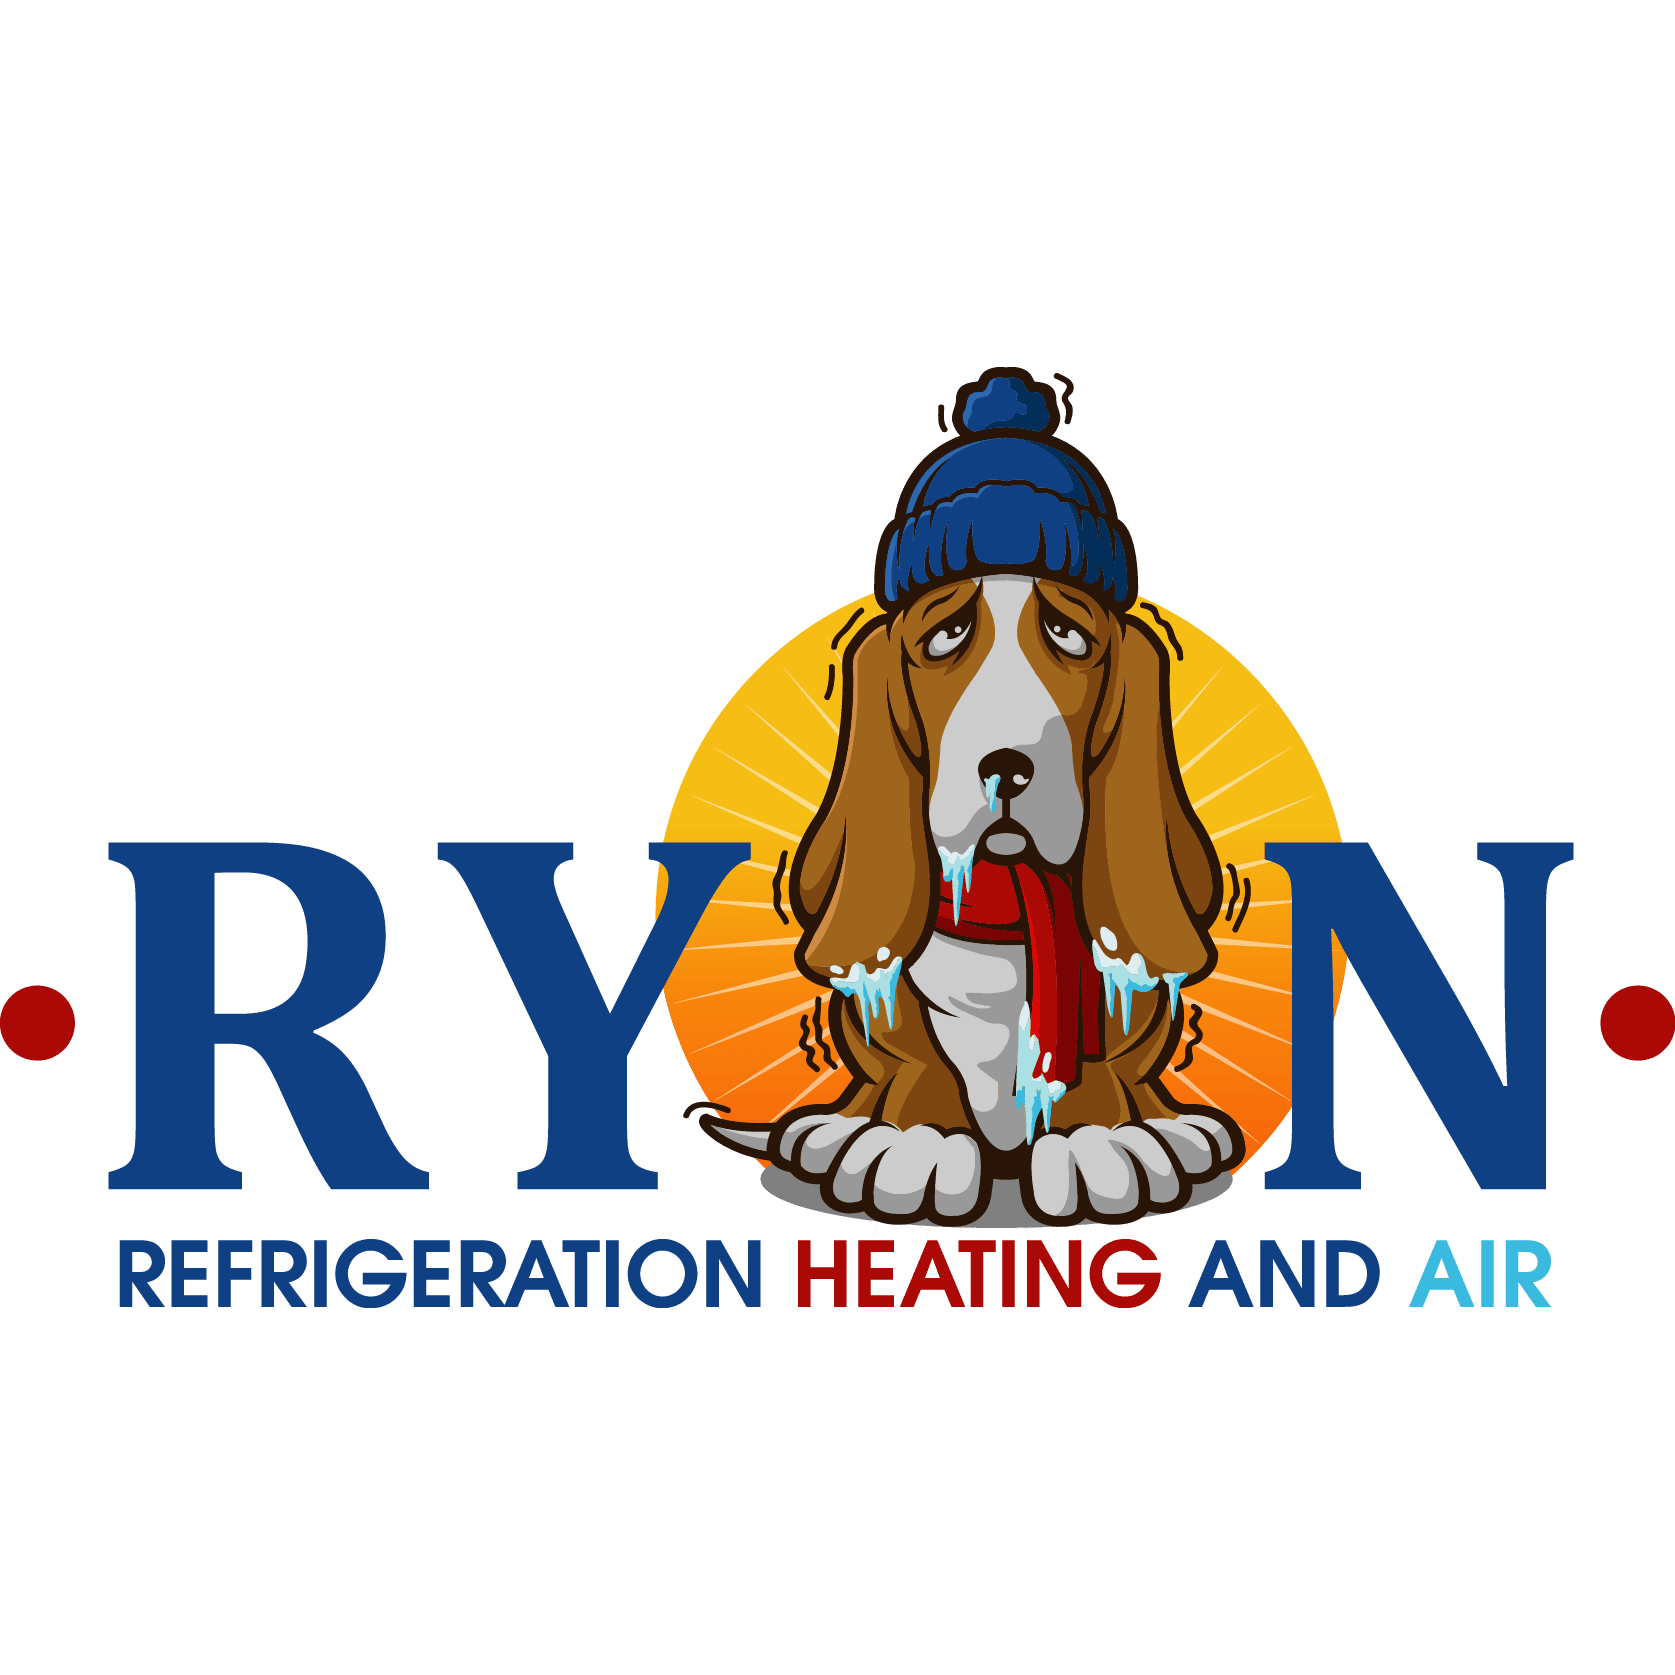 RYAN REFRIGERATION HEATING AND AIR